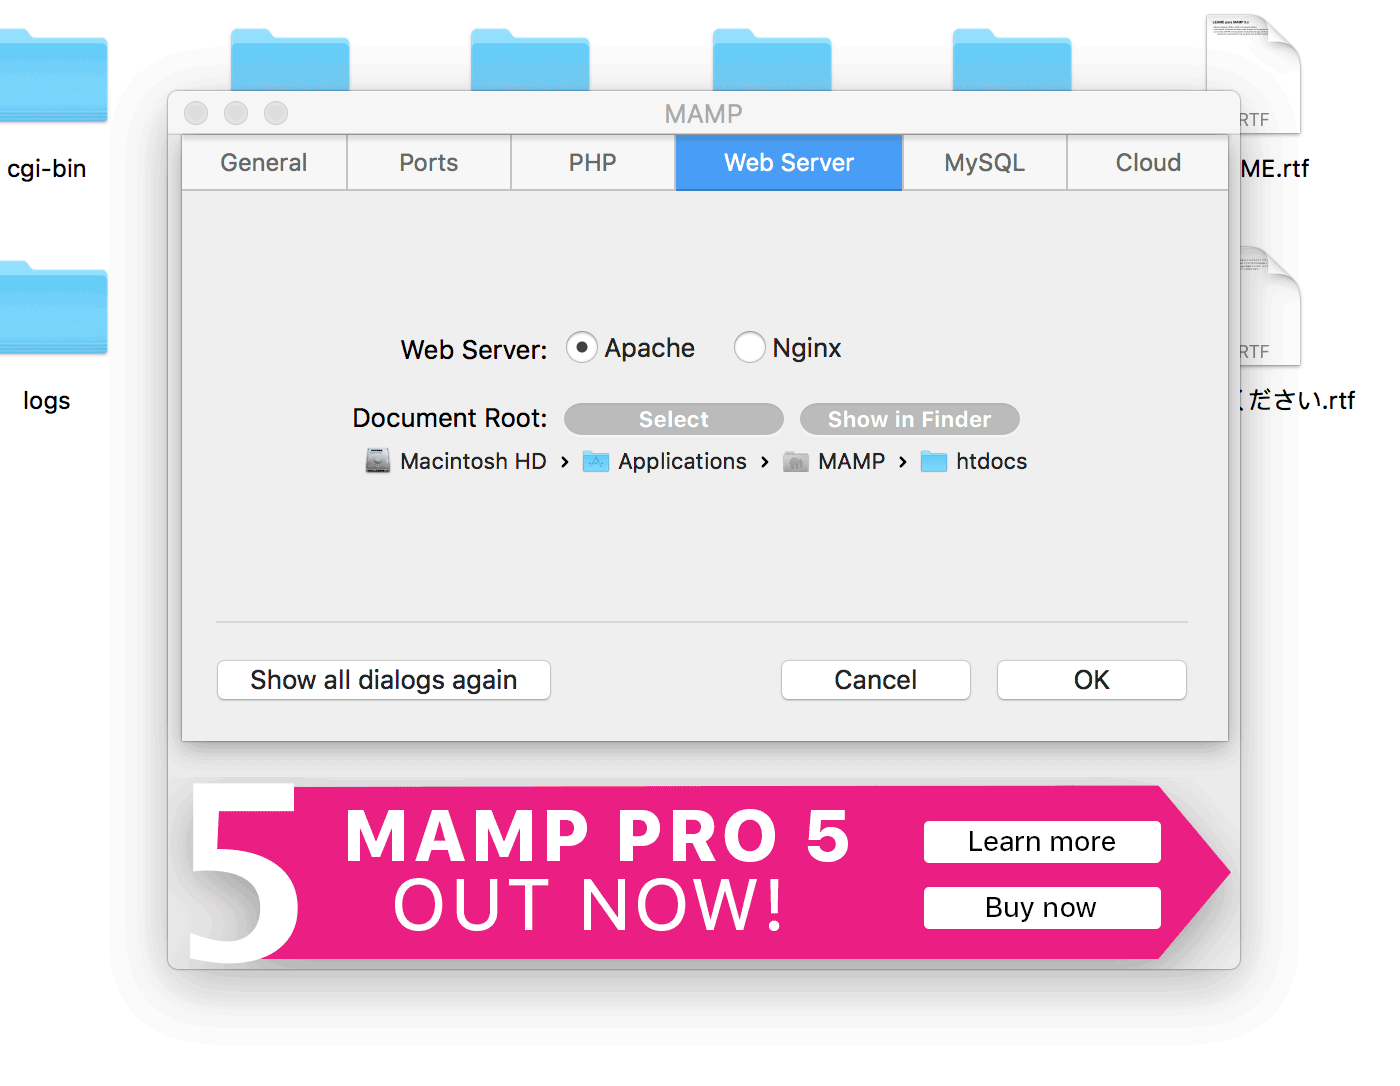 The MAMP window on the Web Server tab.